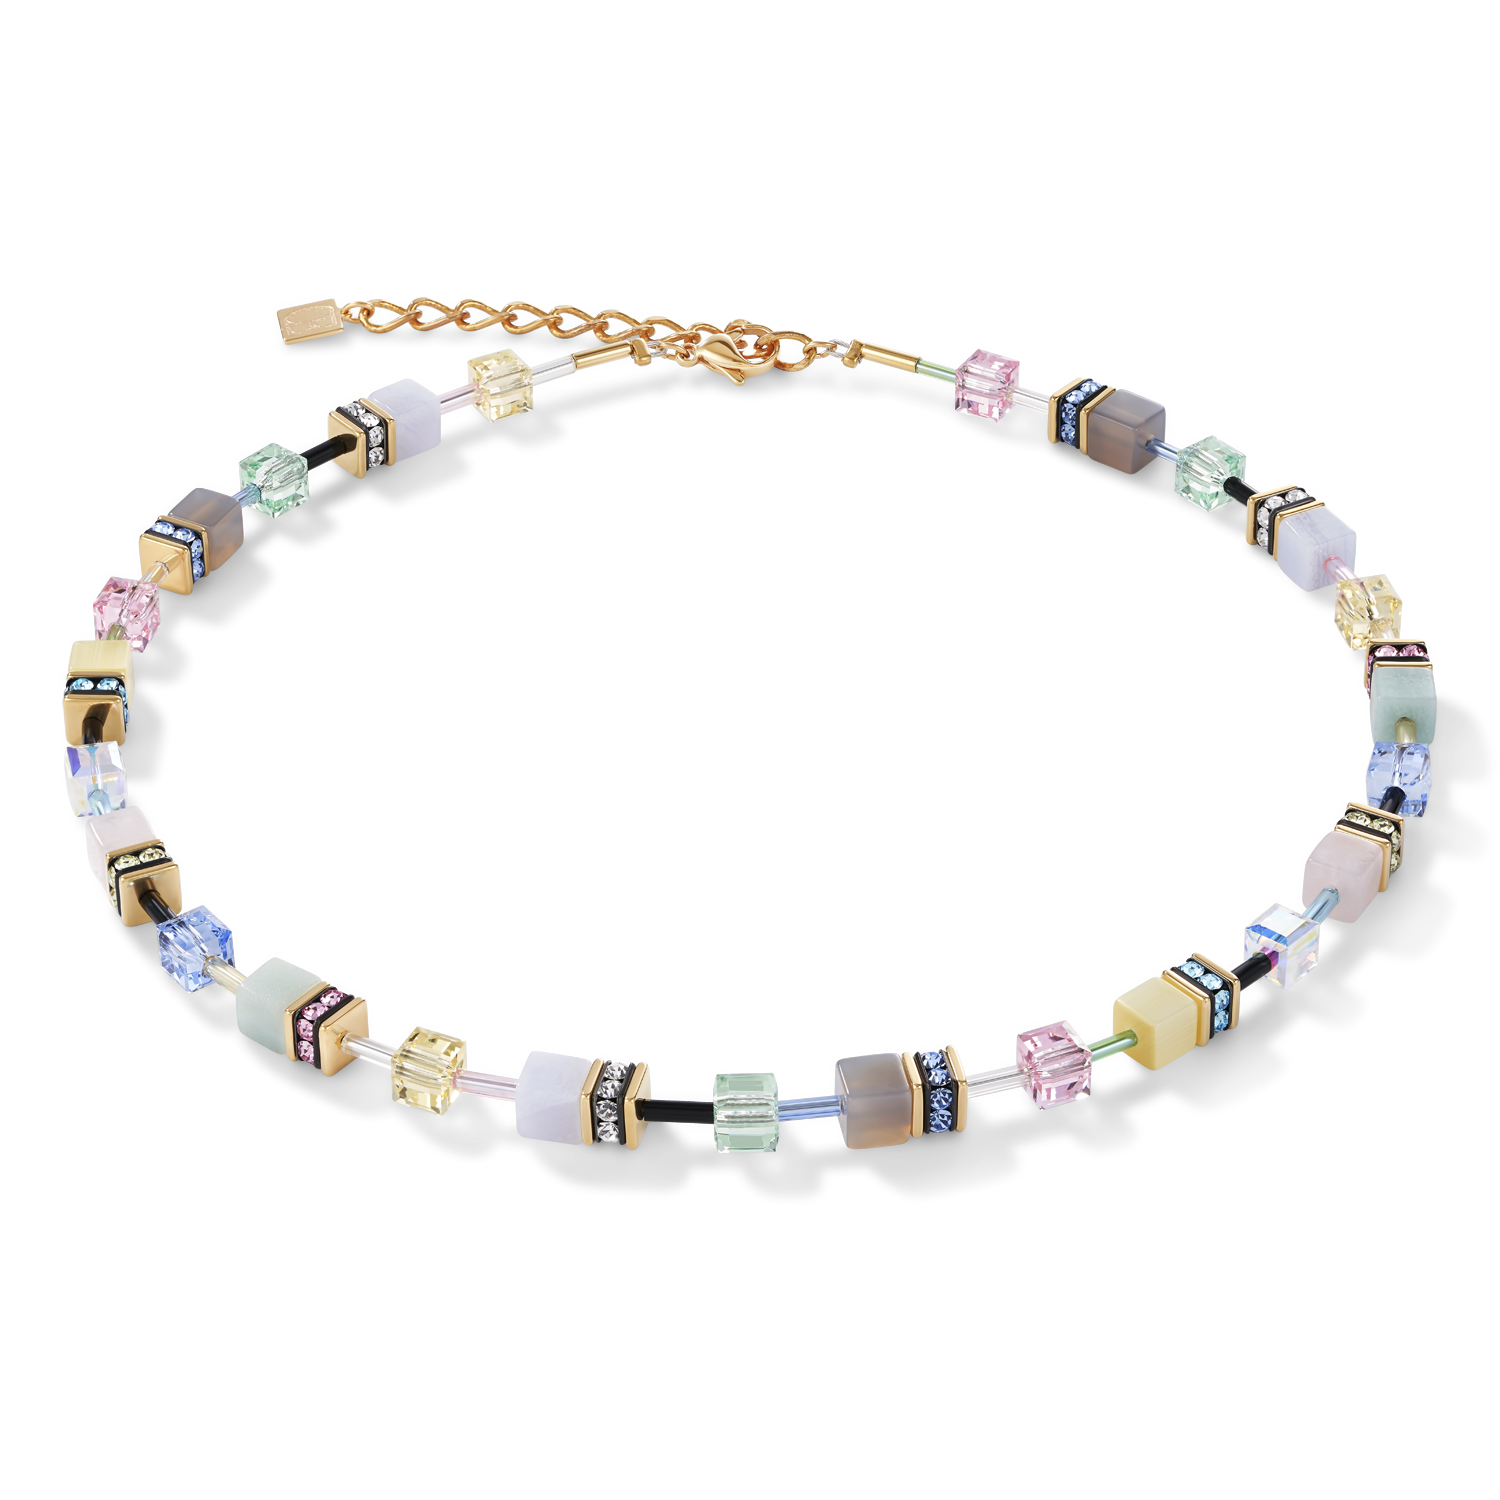 Necklace GeoCUBE® Crystals & Gemstones multicolour romance